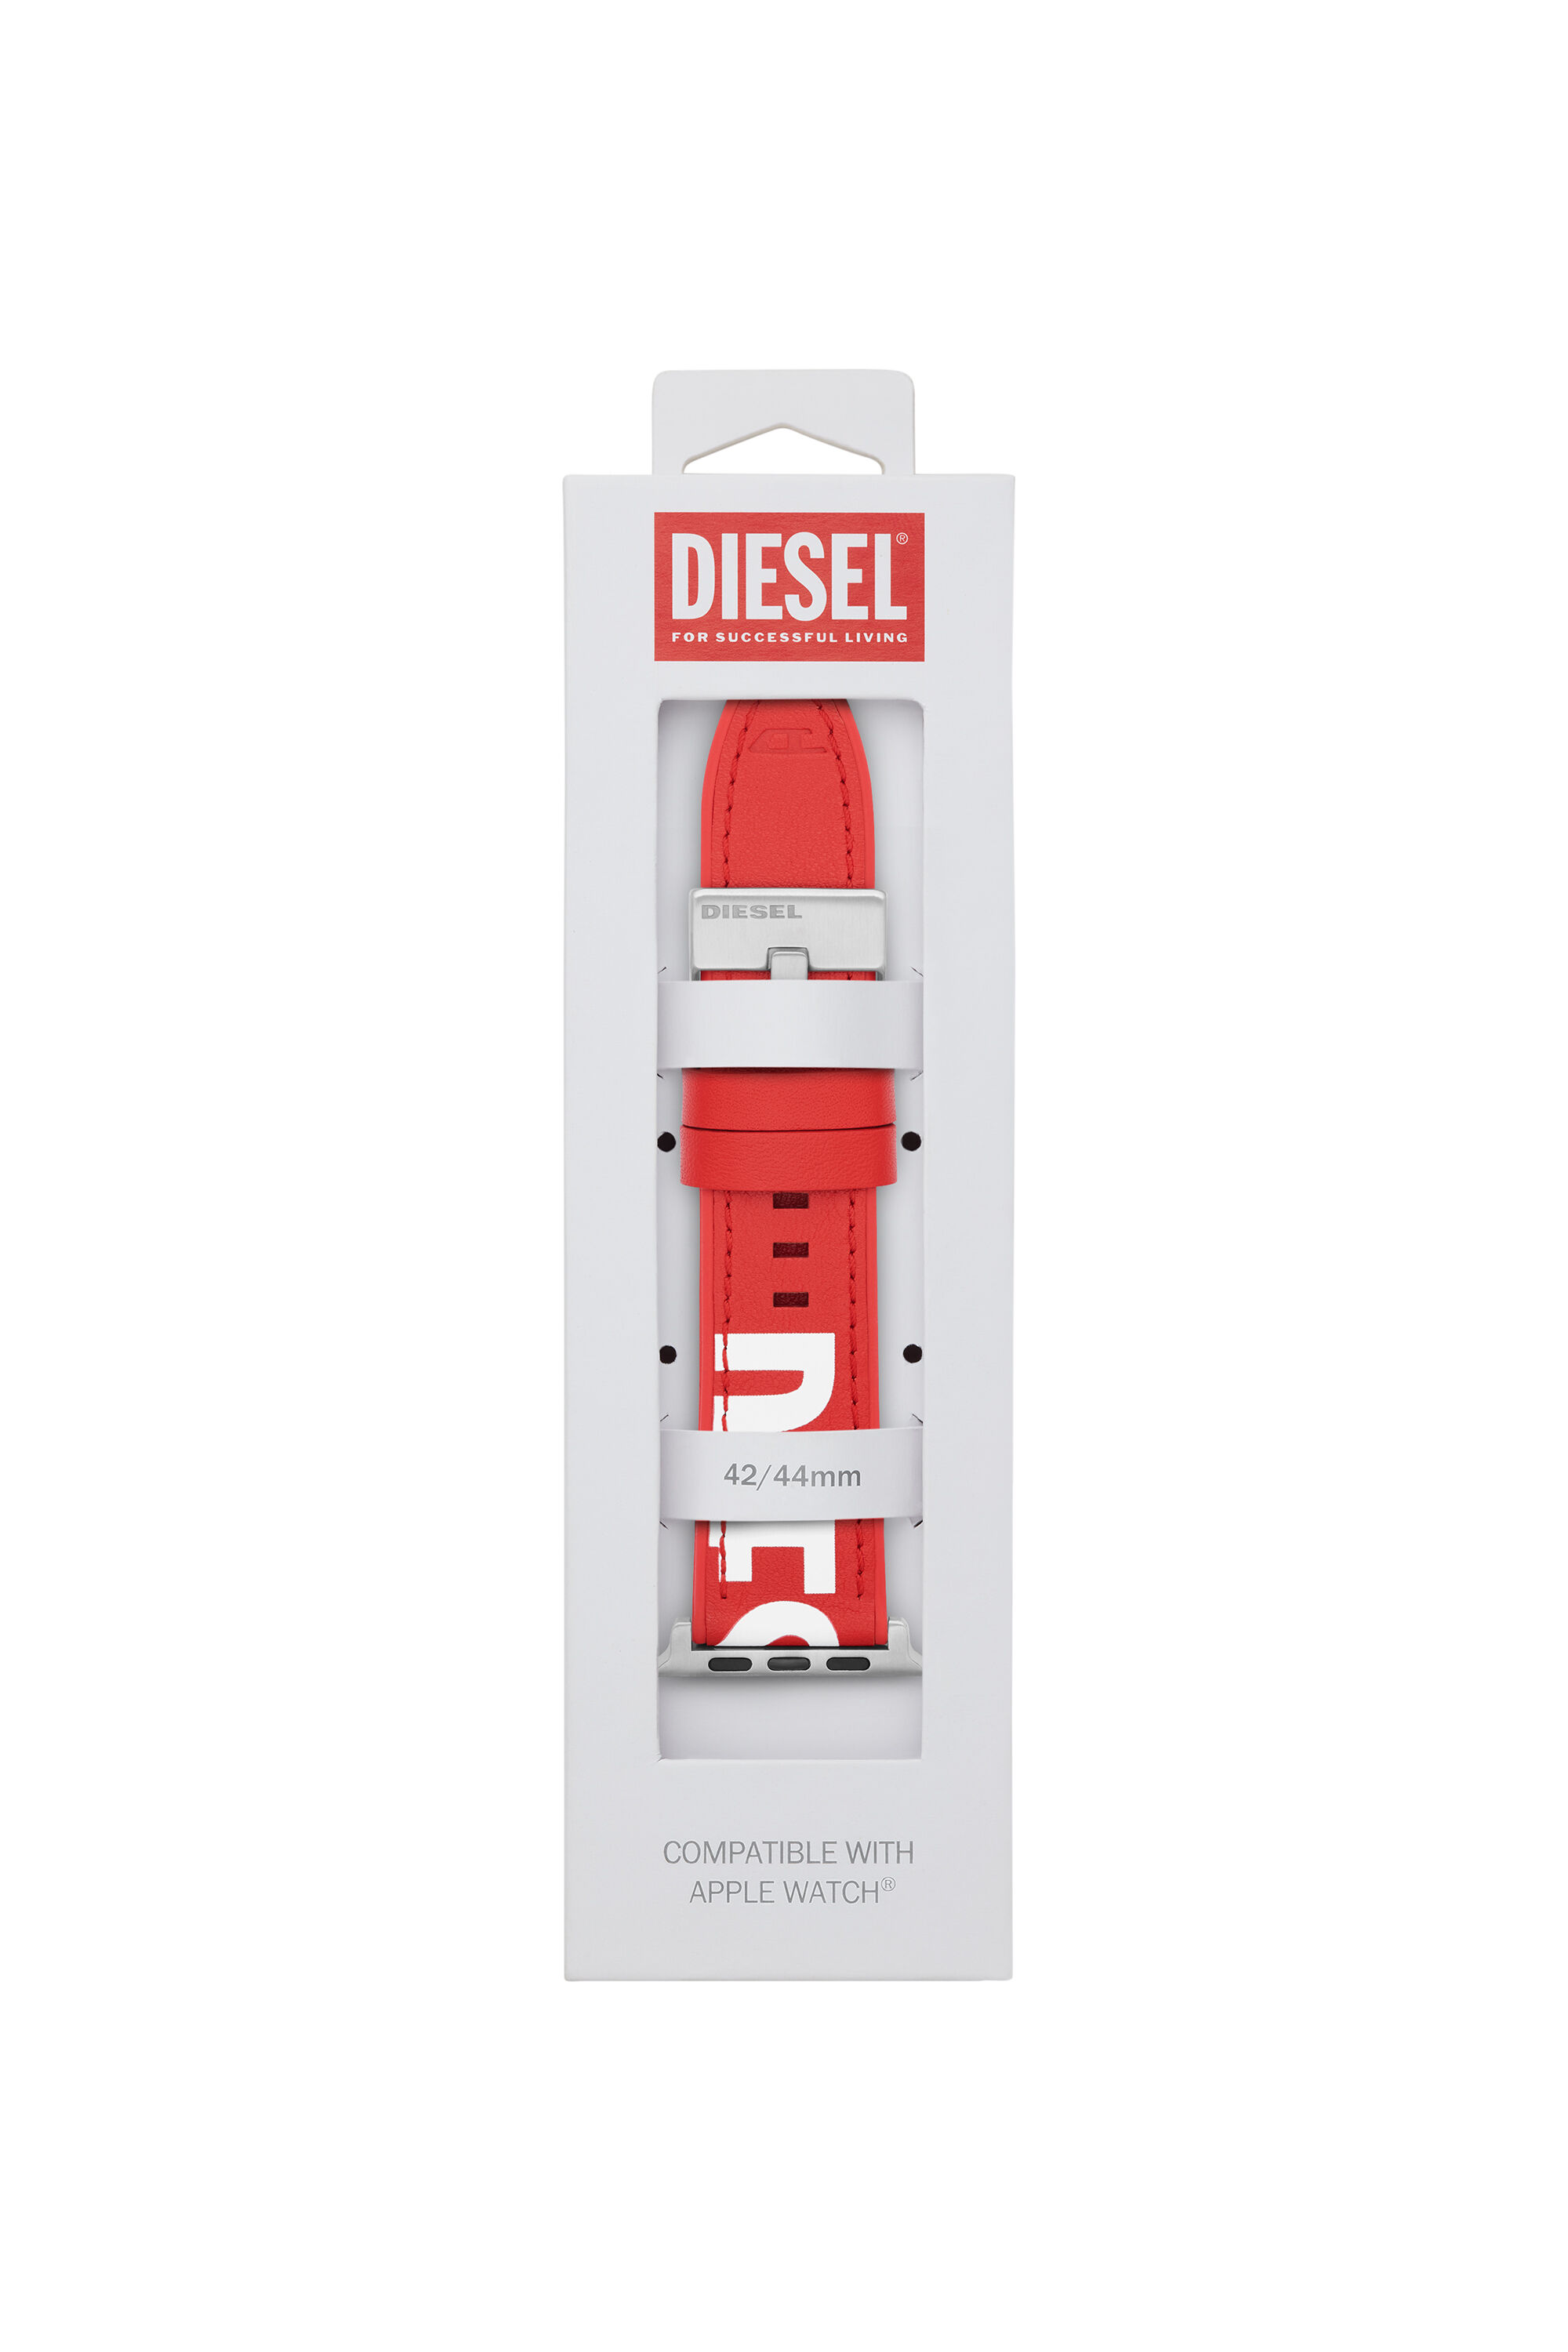 Diesel - DSS003, レッド - Image 2